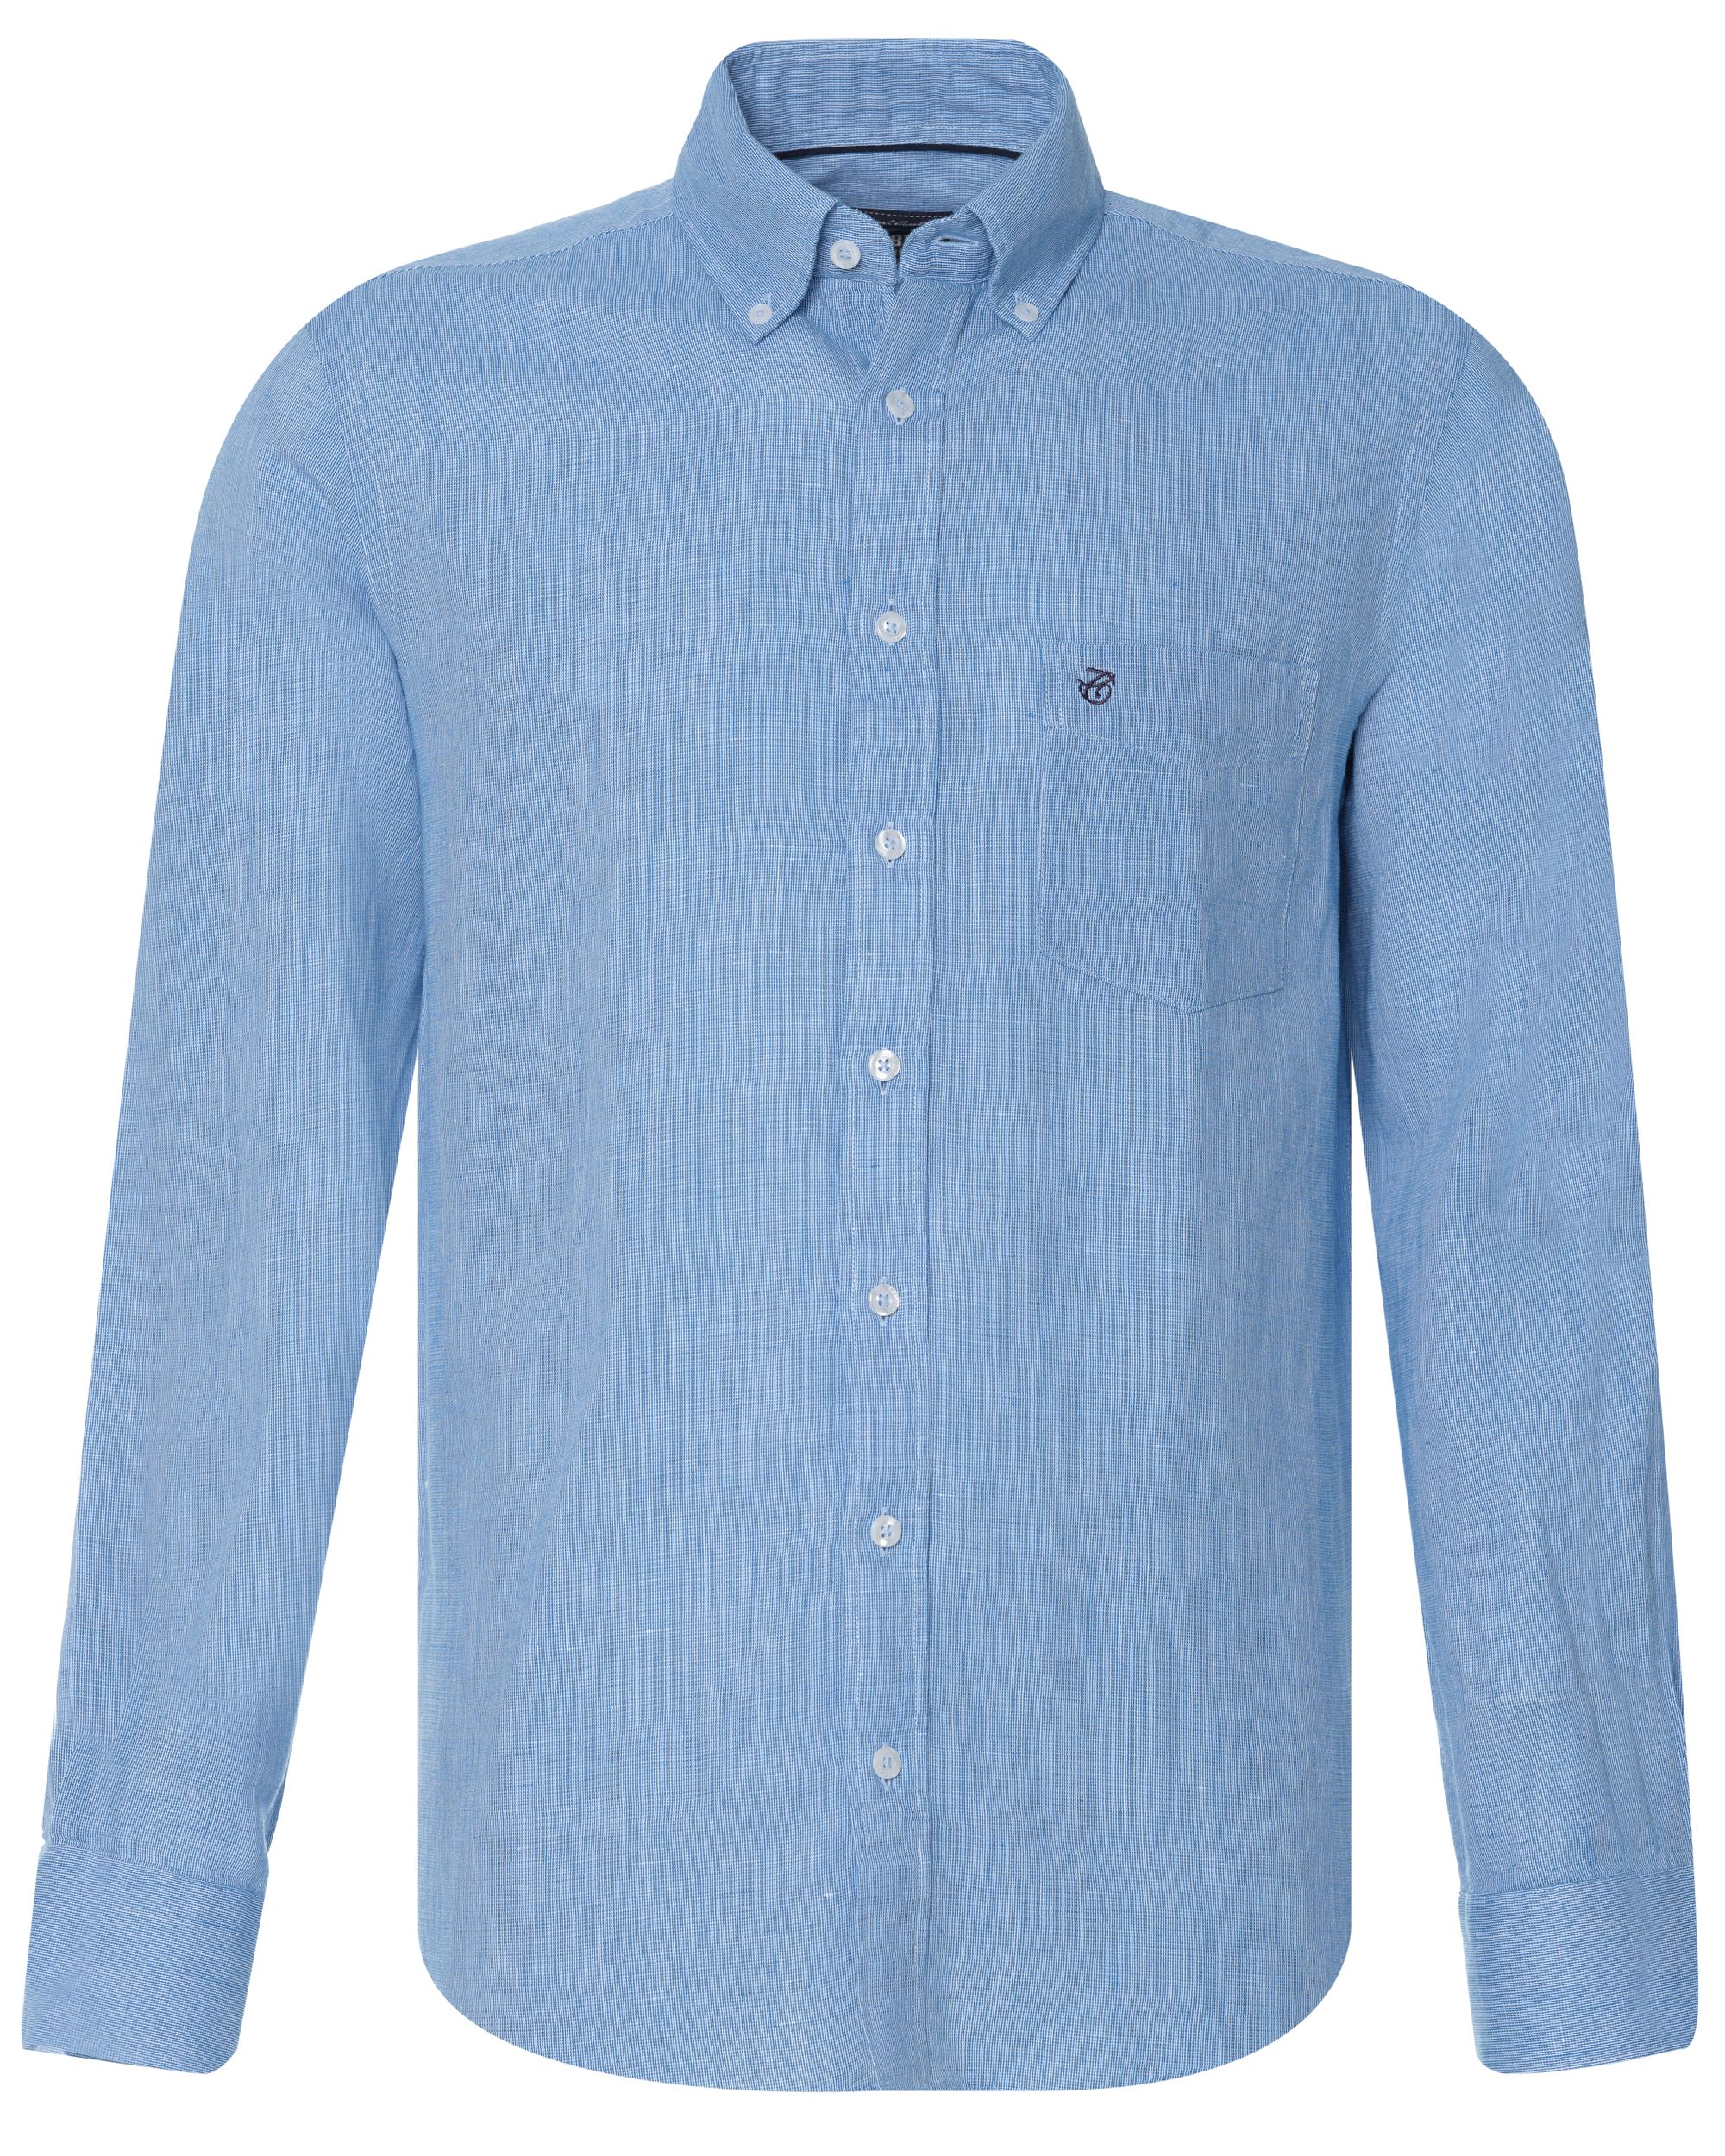 Campbell Classic Overhemd LM Lichtblauw uni 073961-002-L